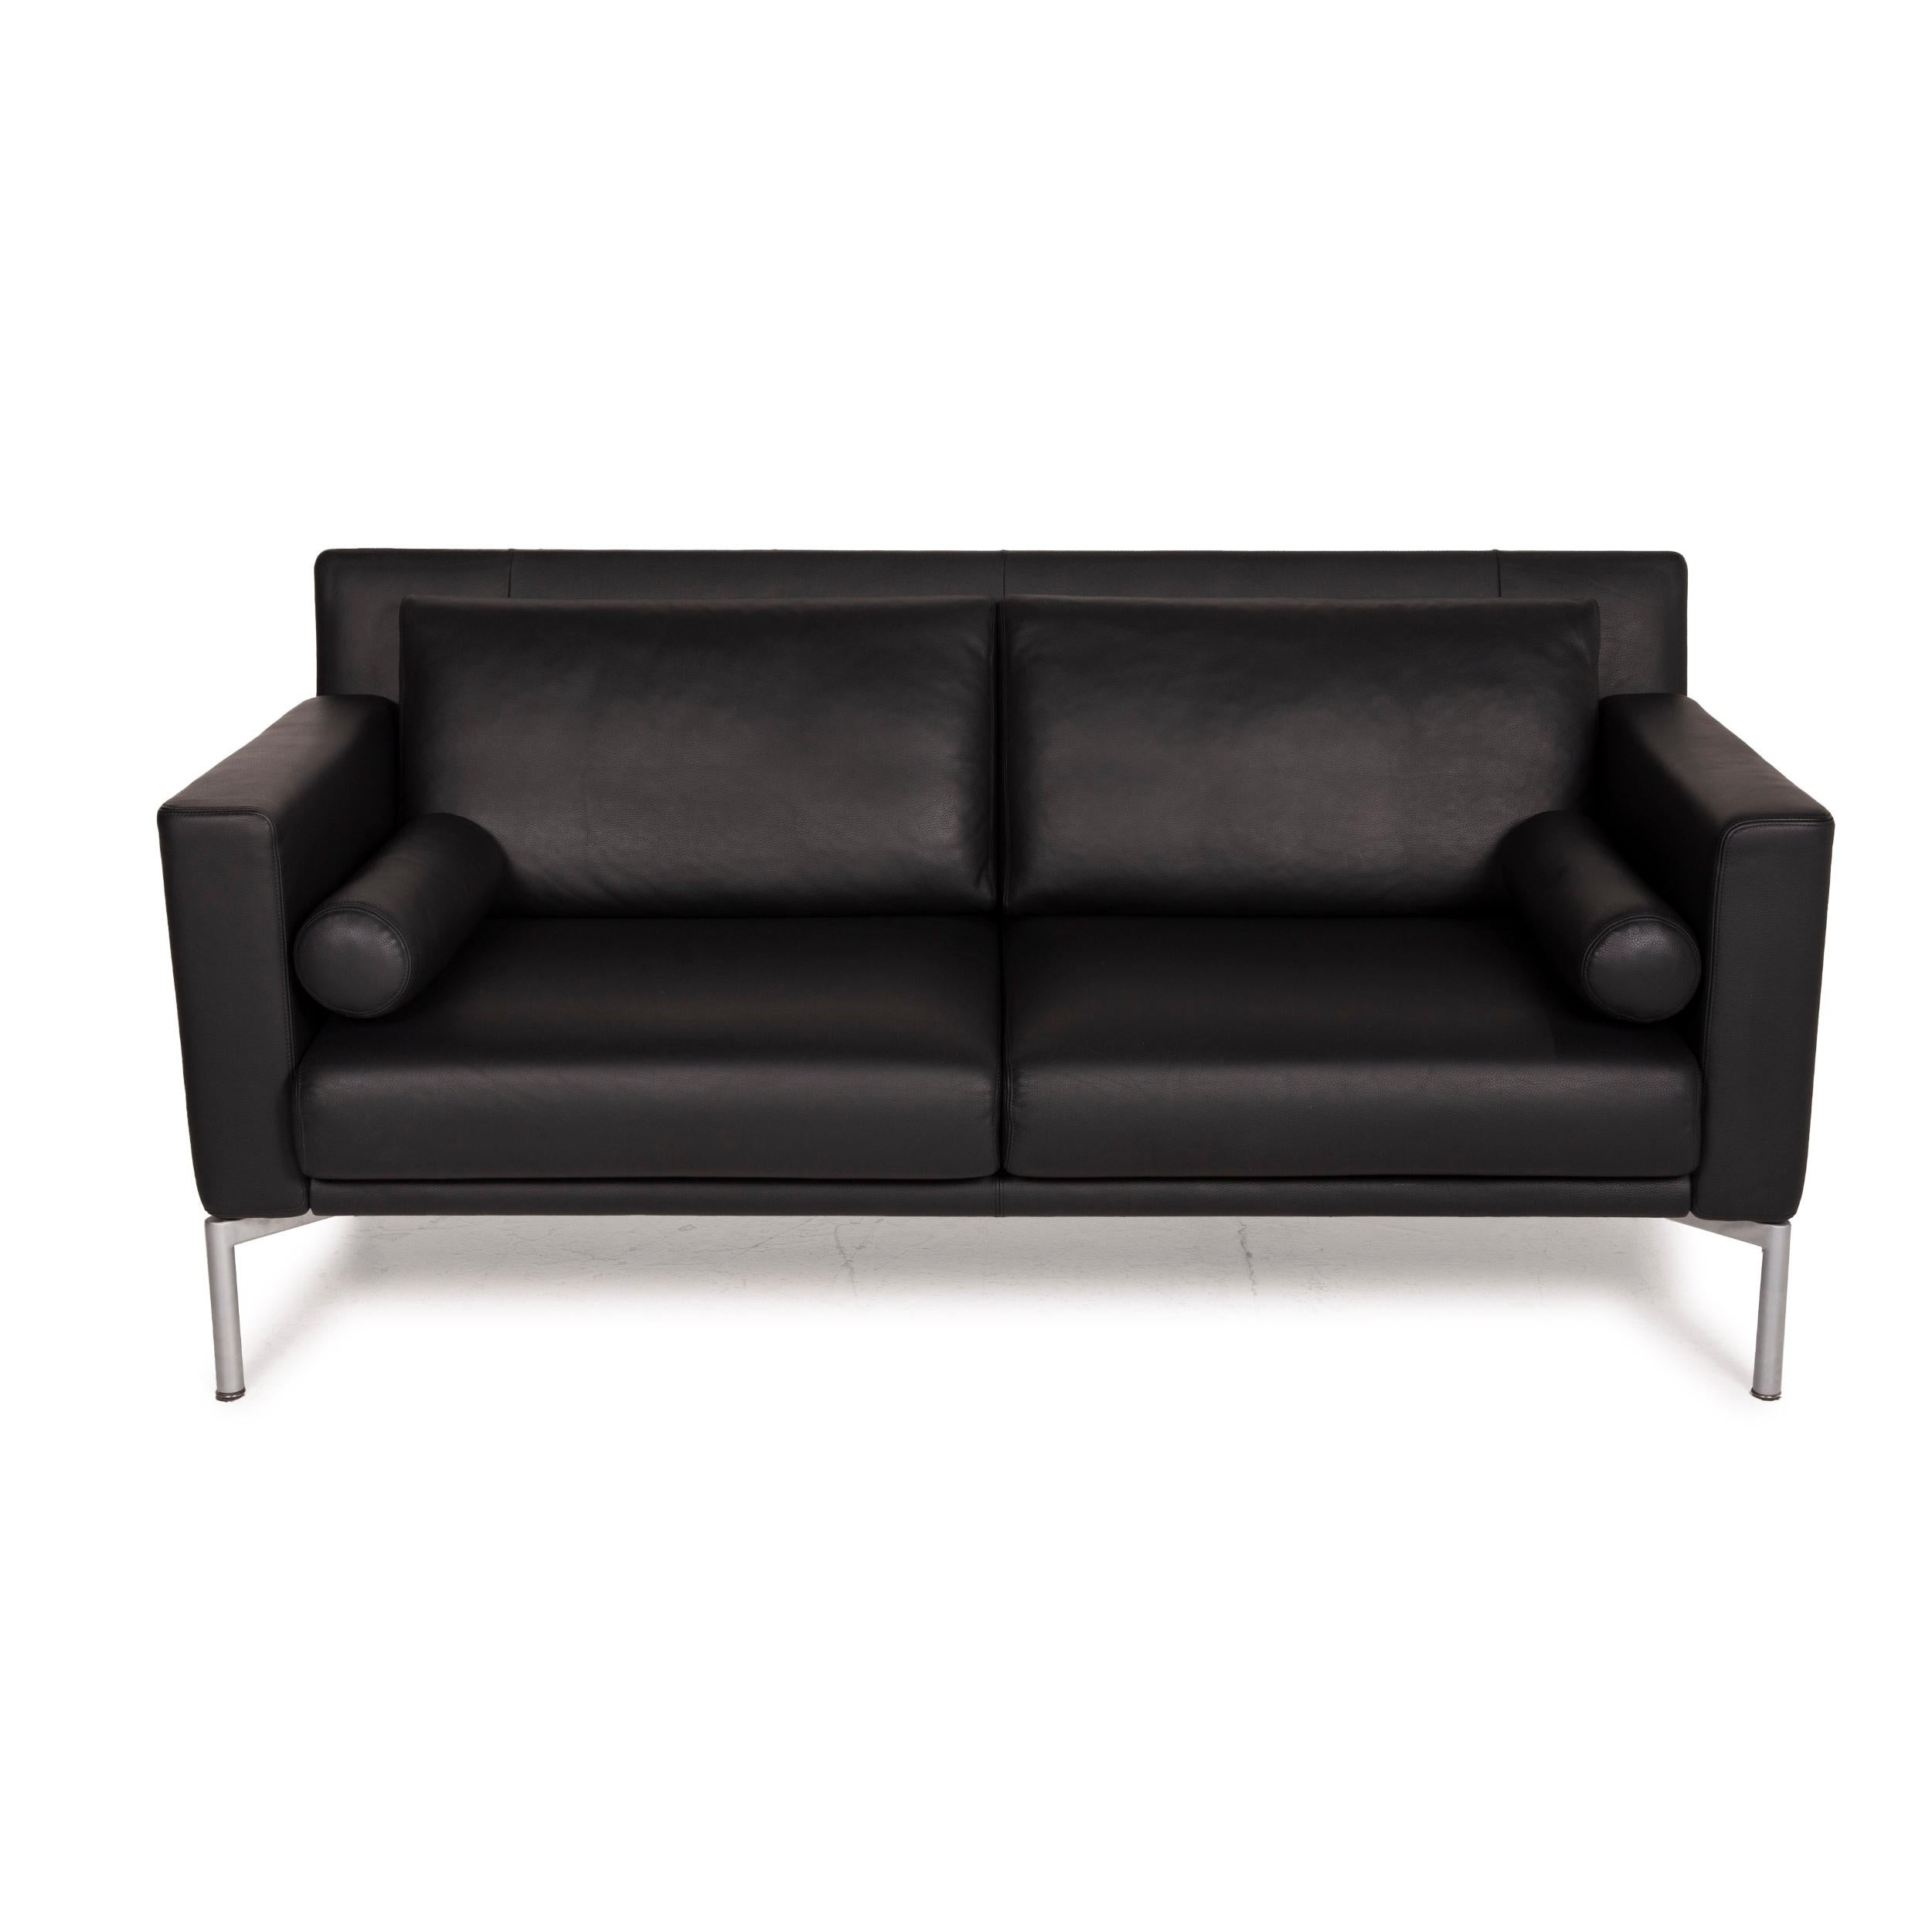 German Walter Knoll Jason 390 Leather Sofa Black Two-Seater